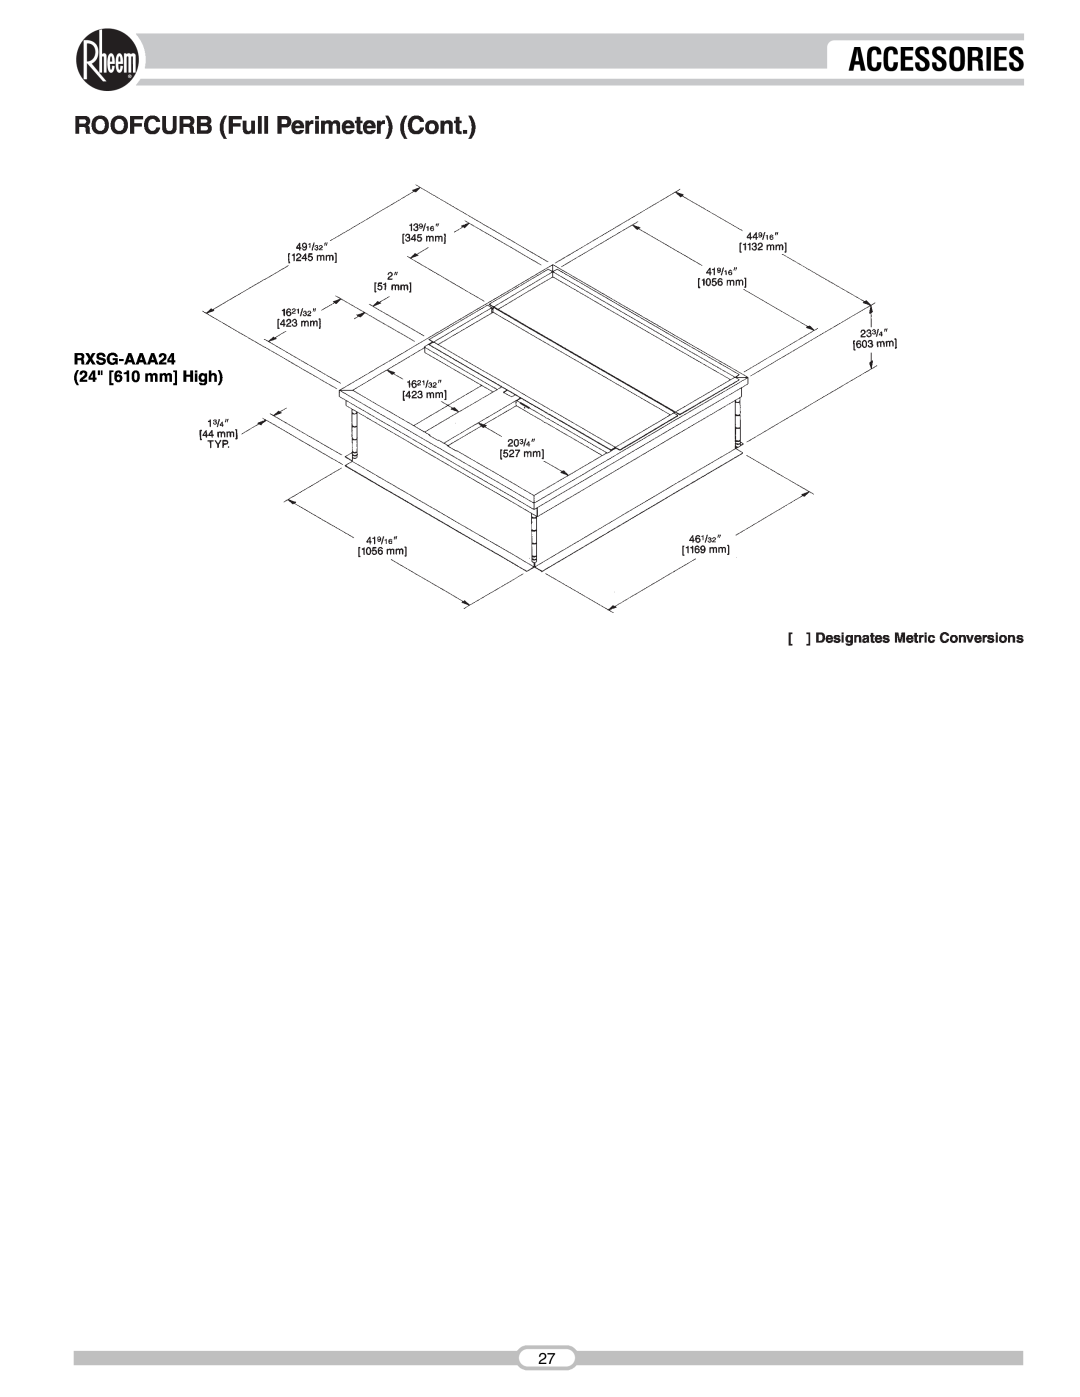 Rheem RSNA-B Series manual ROOFCURB Full Perimeter Cont, Accessories, RXSG-AAA24 24 610 mm High 